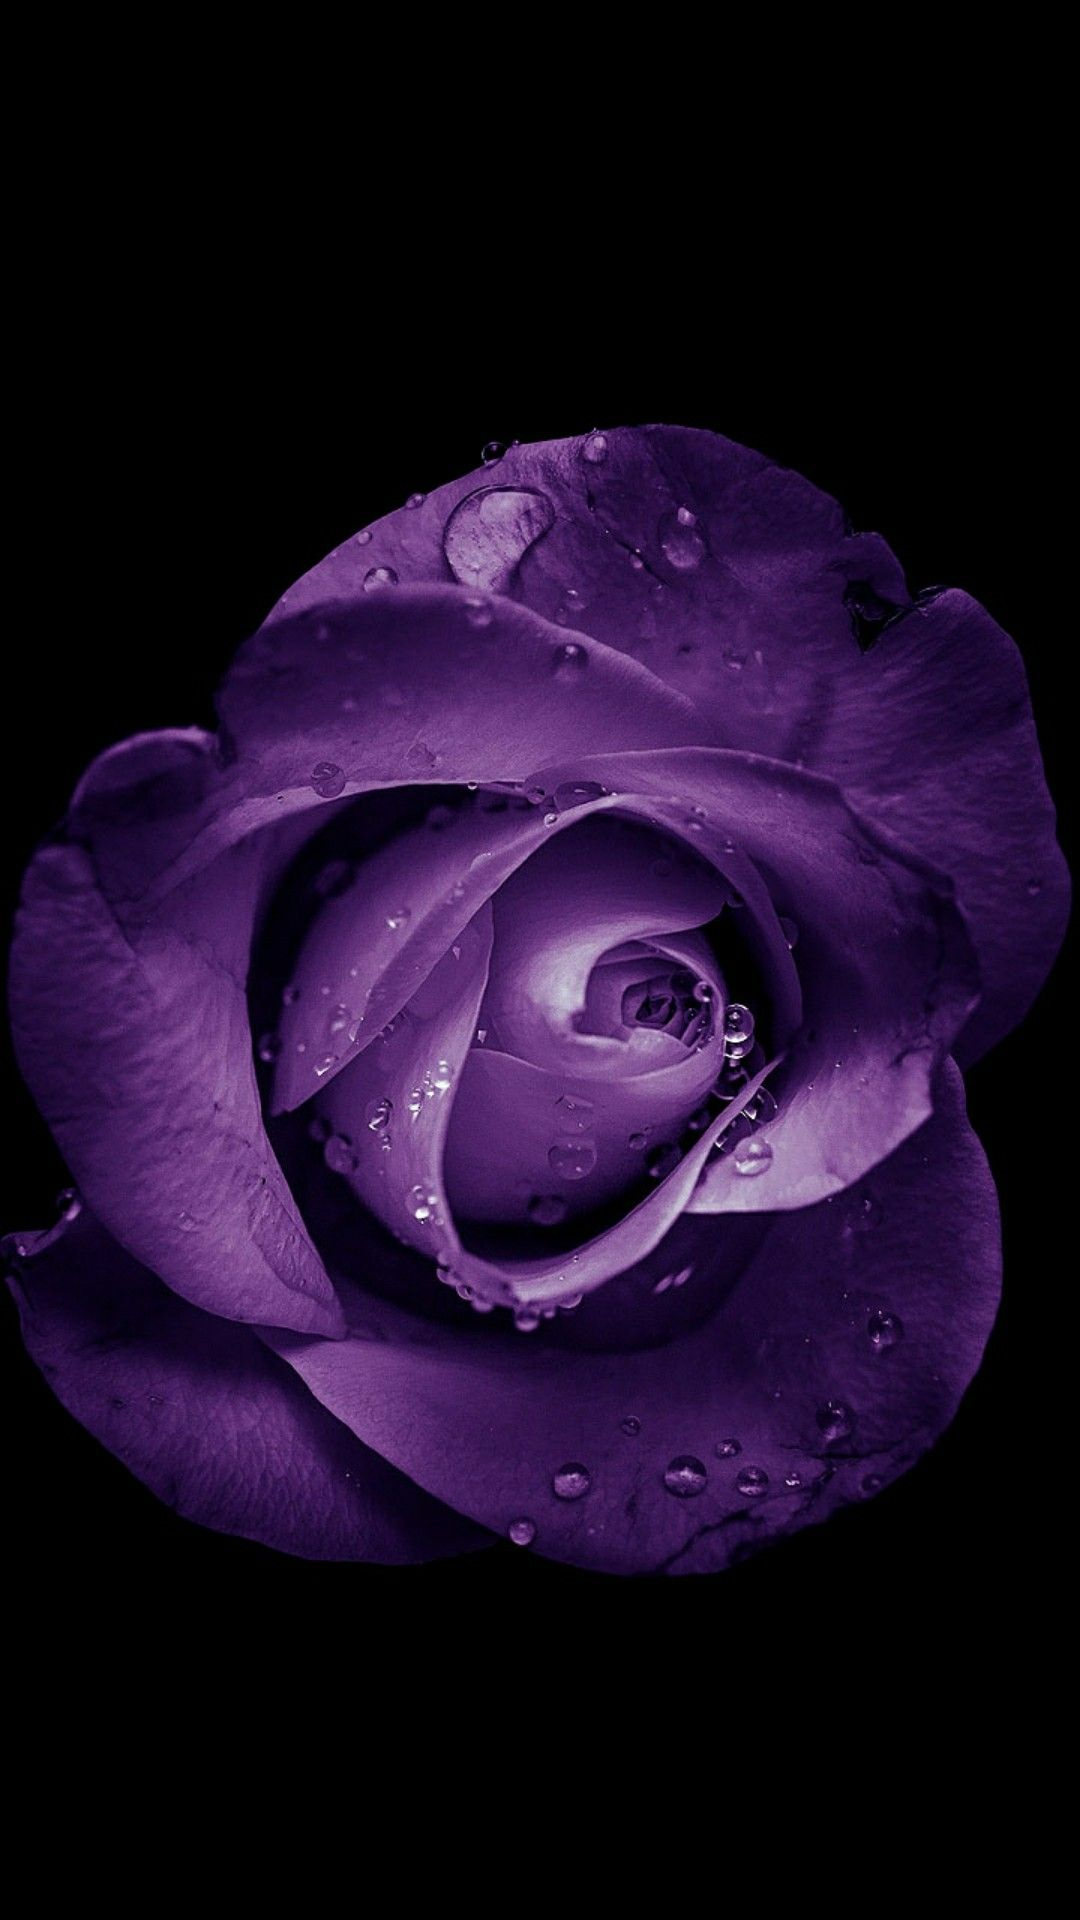 1080x1920 Purple rose | Purple roses, Purple flowers wallpaper, Rose wallpaper